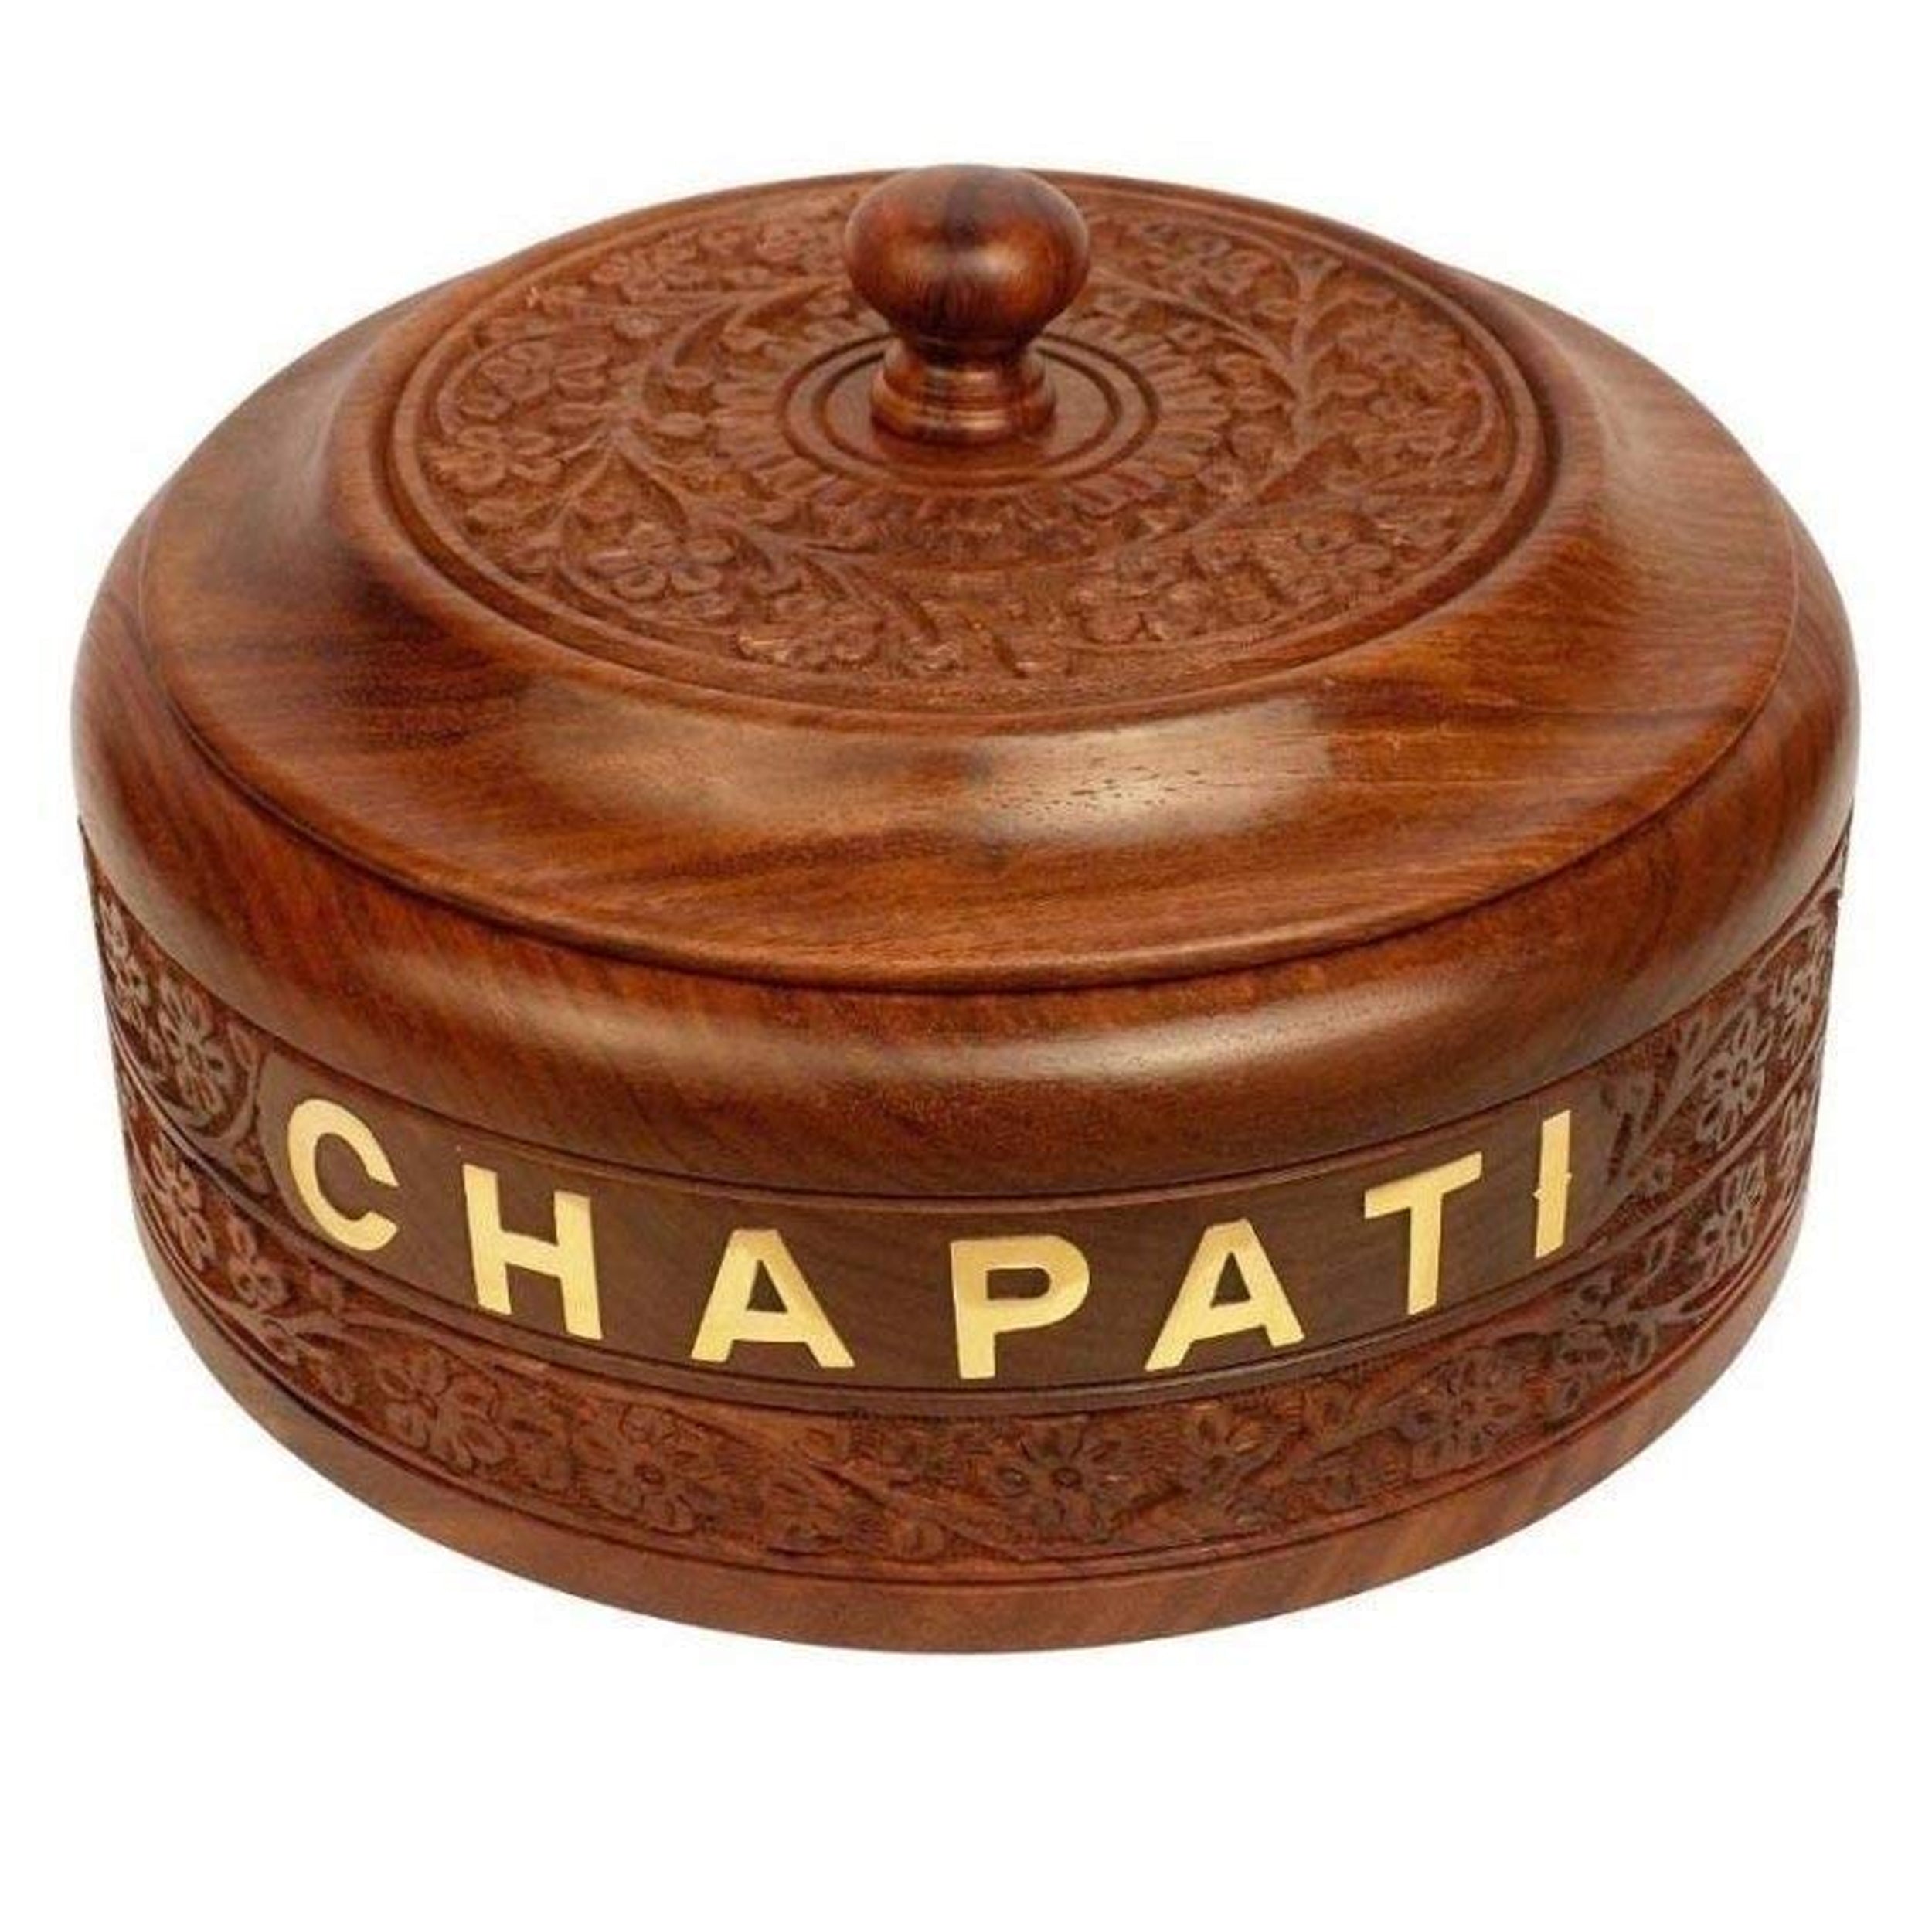 Wooden Chapati Box